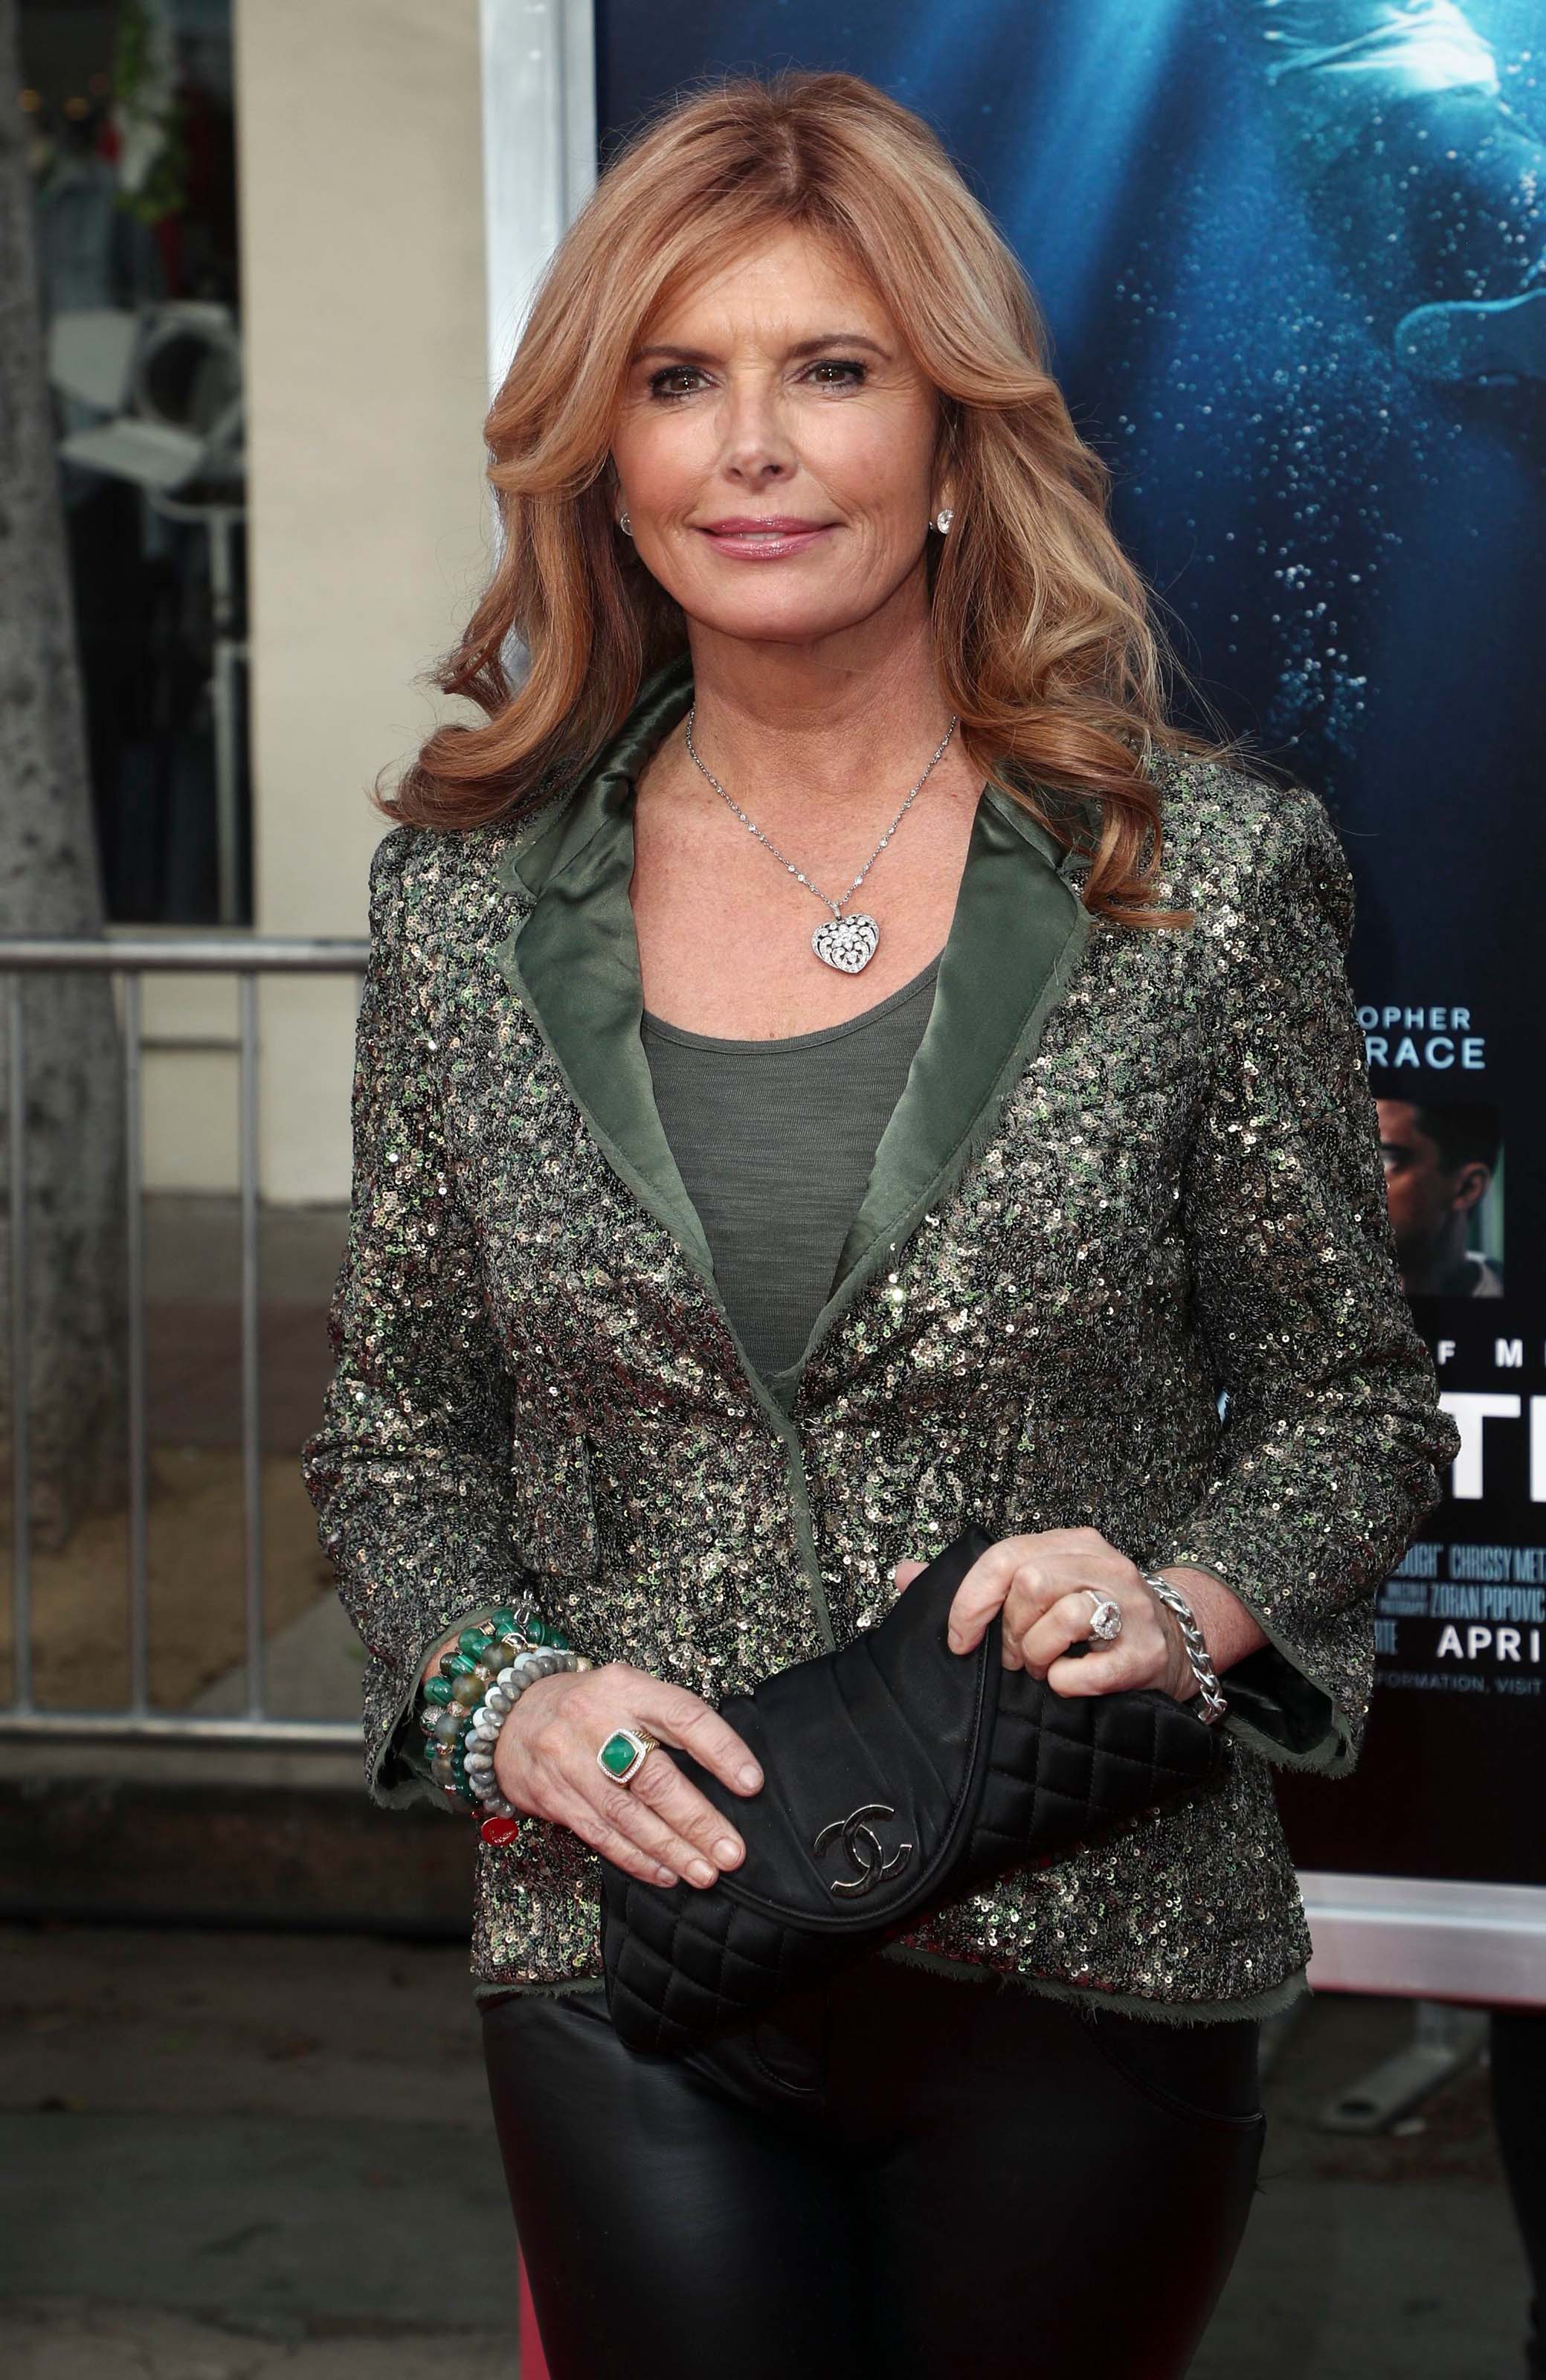 Roma Downey attends Breakthrough Film Premiere